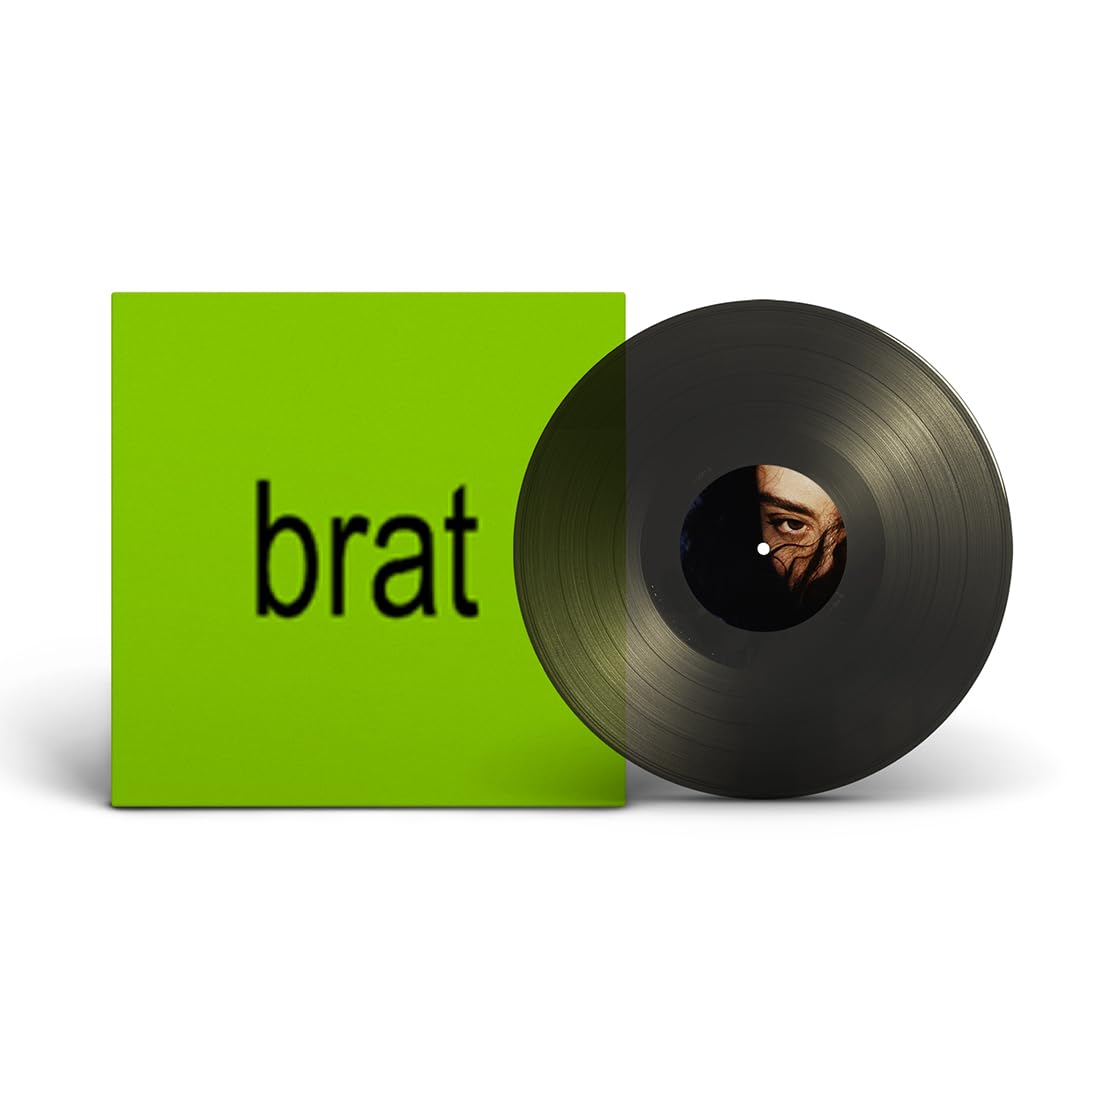 CHARLI XCX – BRAT translucent black vinyl LP